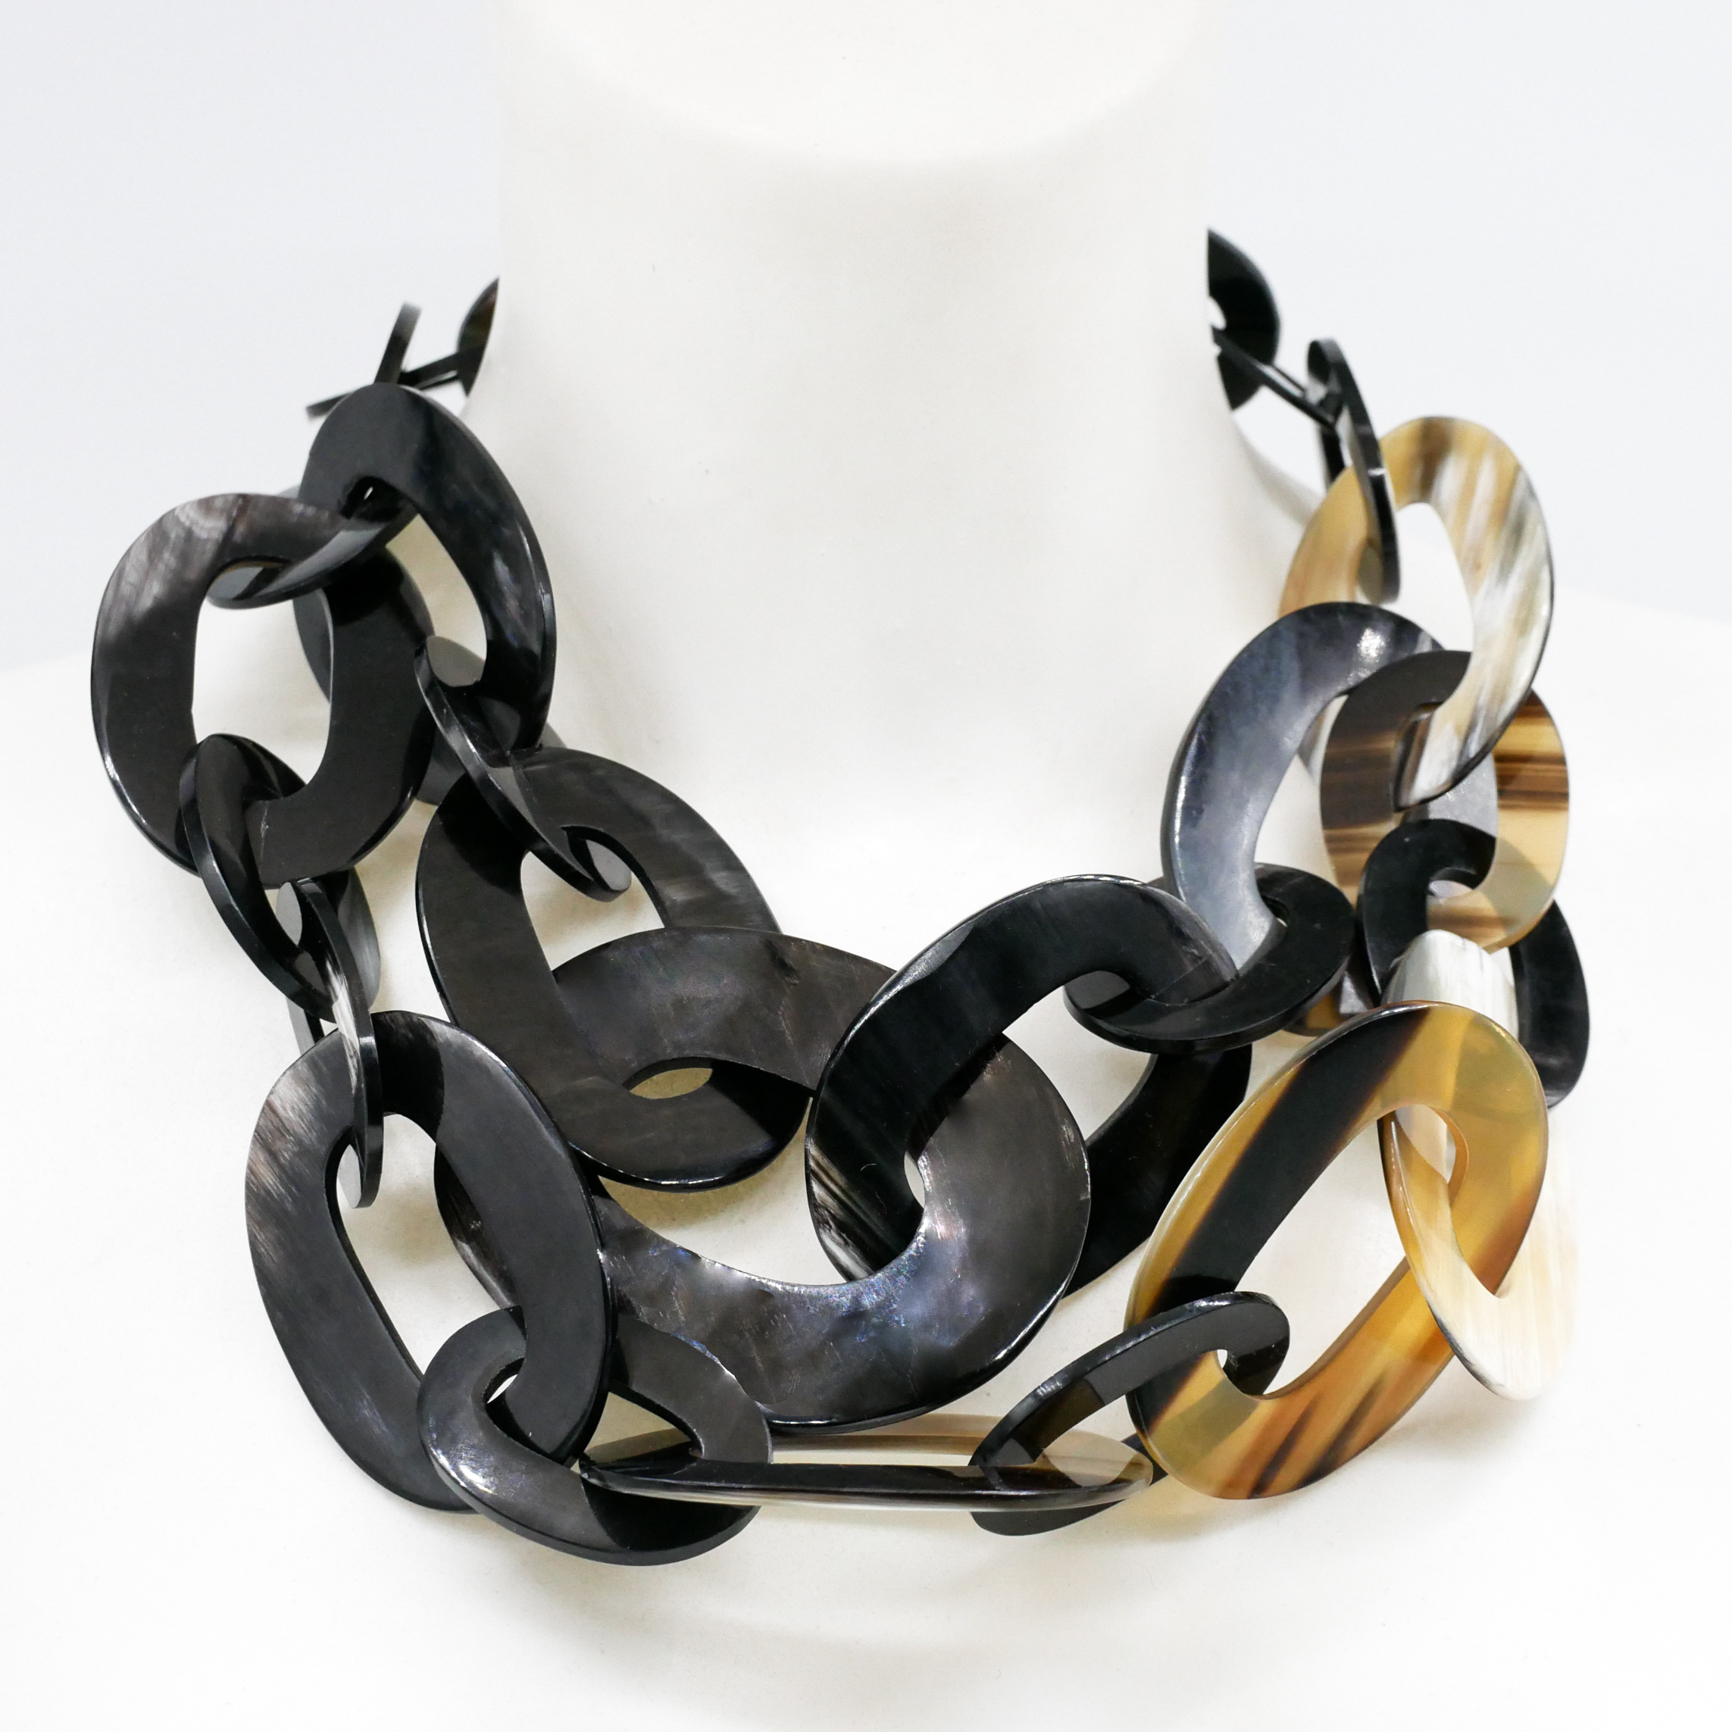 "Craft Art", Hornkette, kurze doppelte Kette, große Ovale, marble Horn